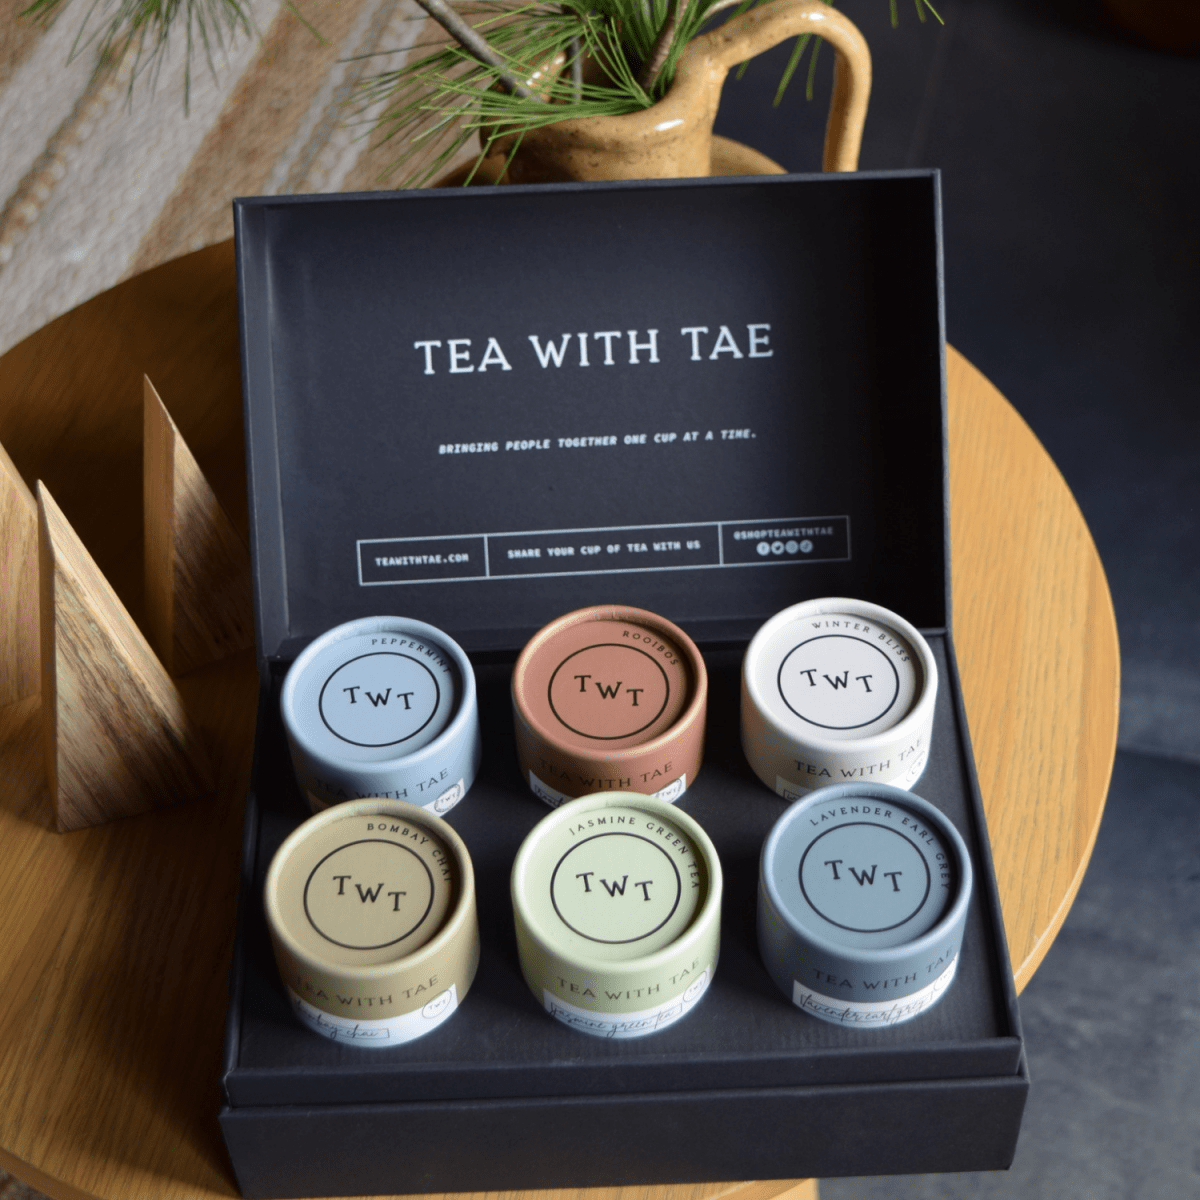 Holiday Tea Bento Box - Tea with Tae